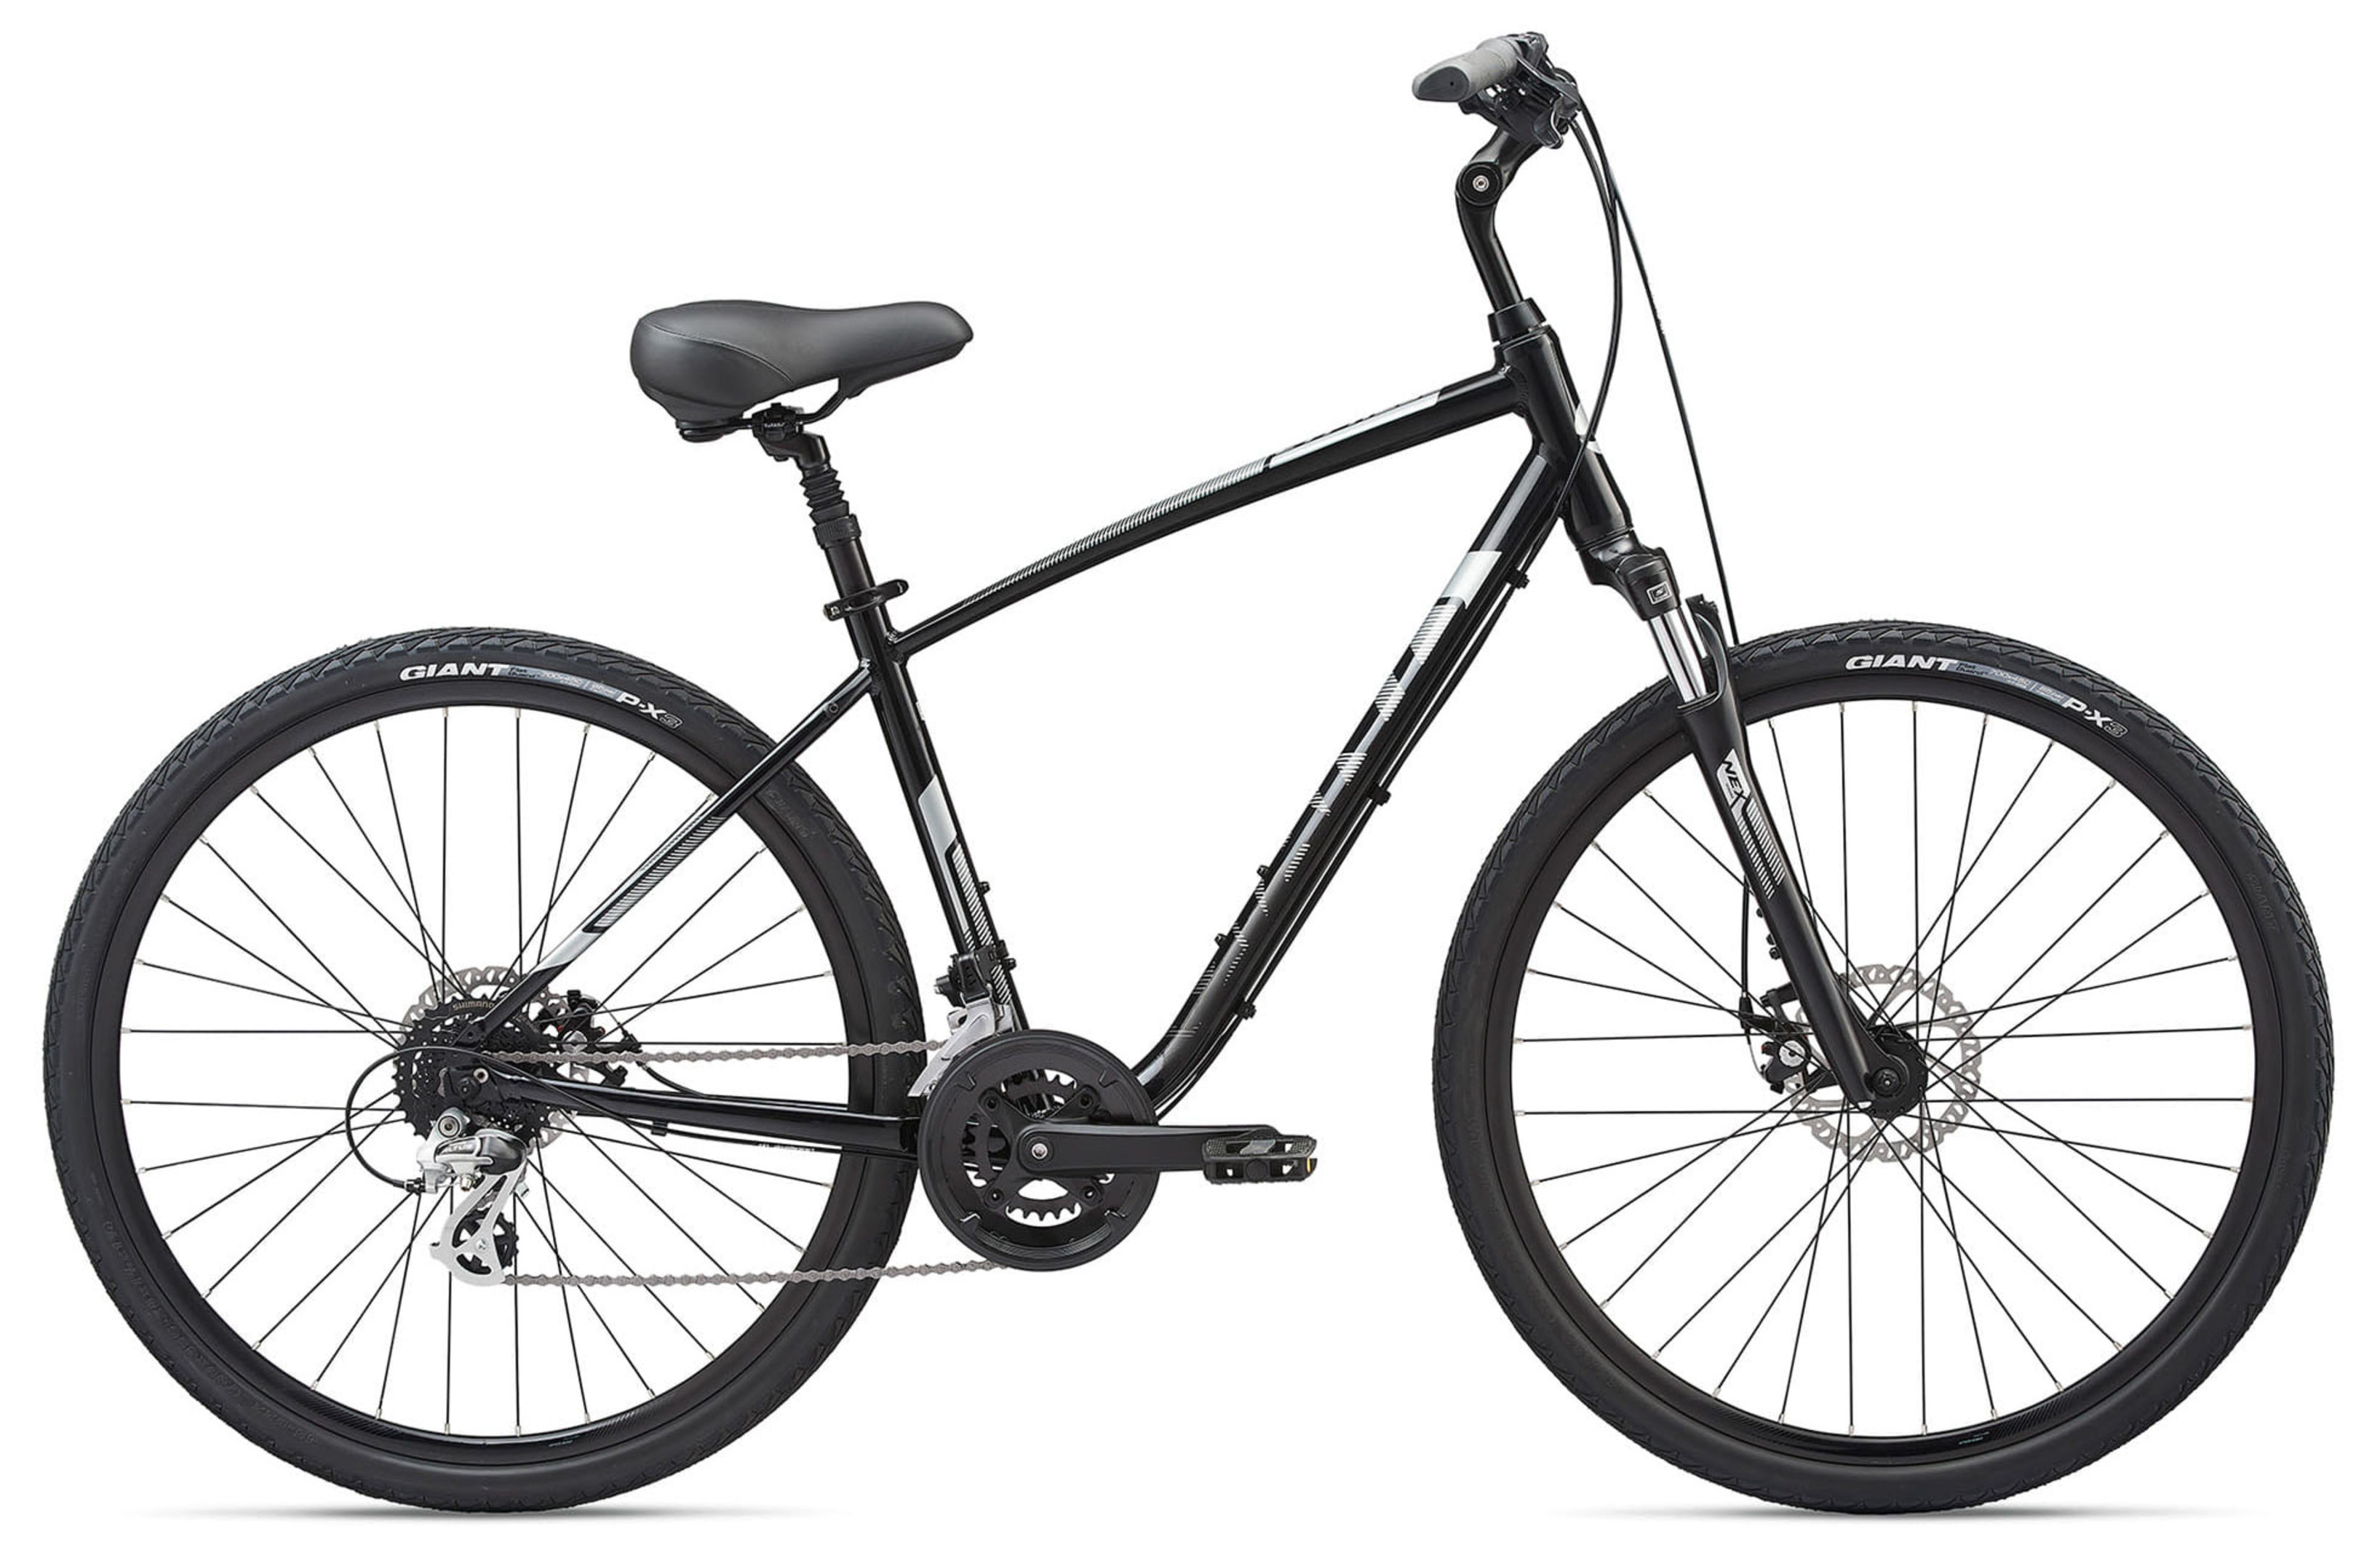  Велосипед Giant Cypress DX (2021) 2021